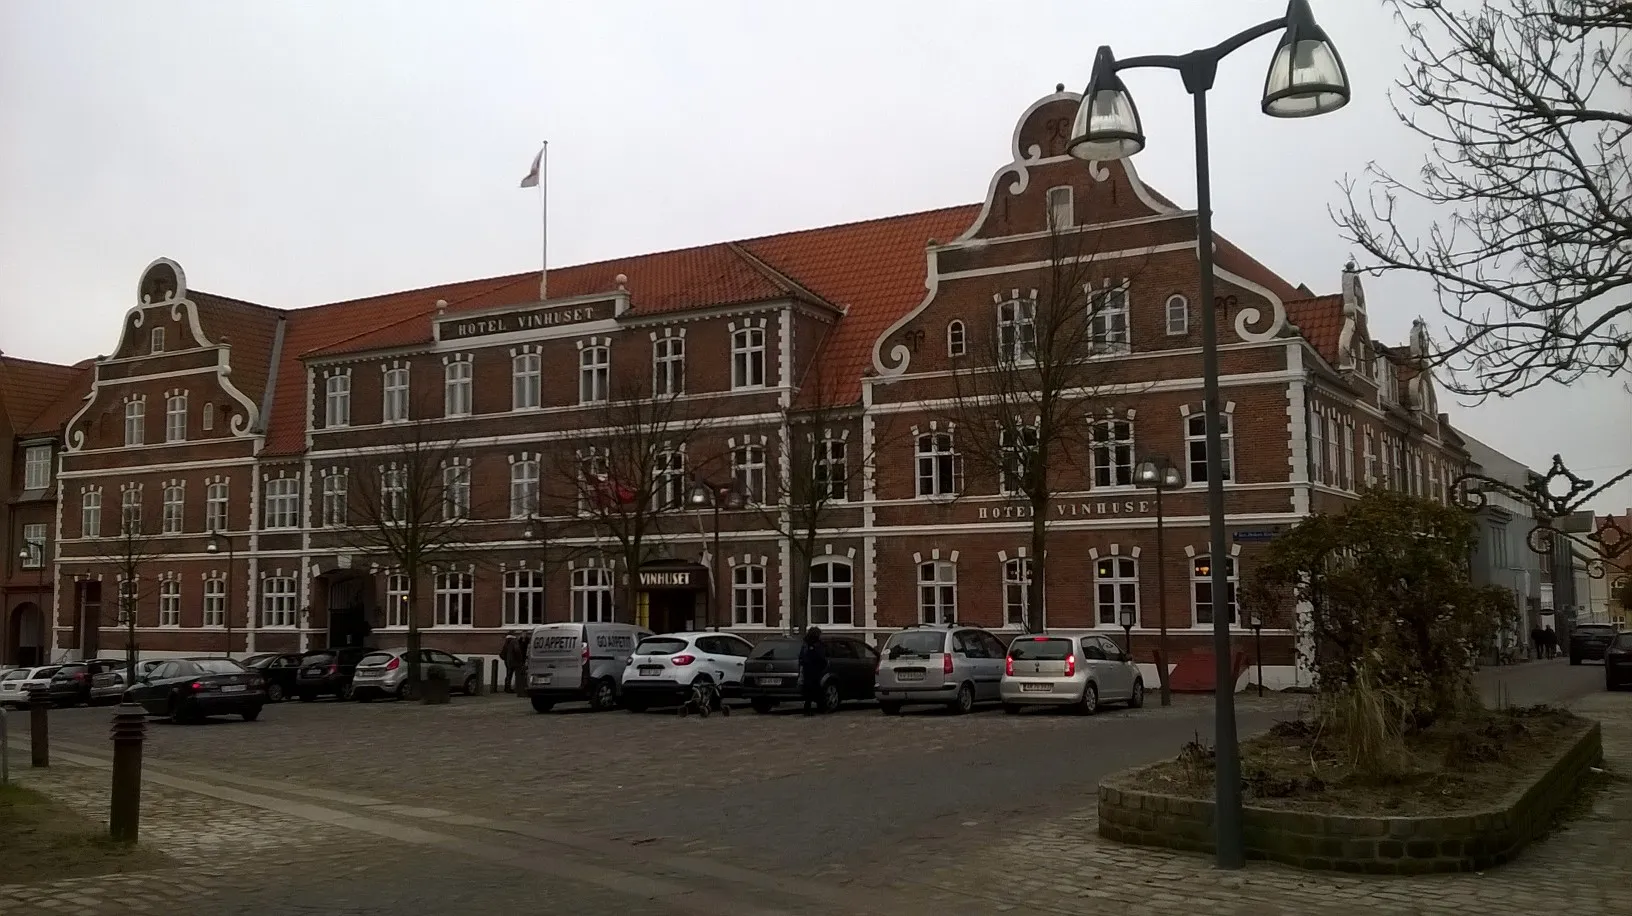 Photo showing: Hotel Vinhuset (Hotel Winehouse) in Næstved, Denmark.